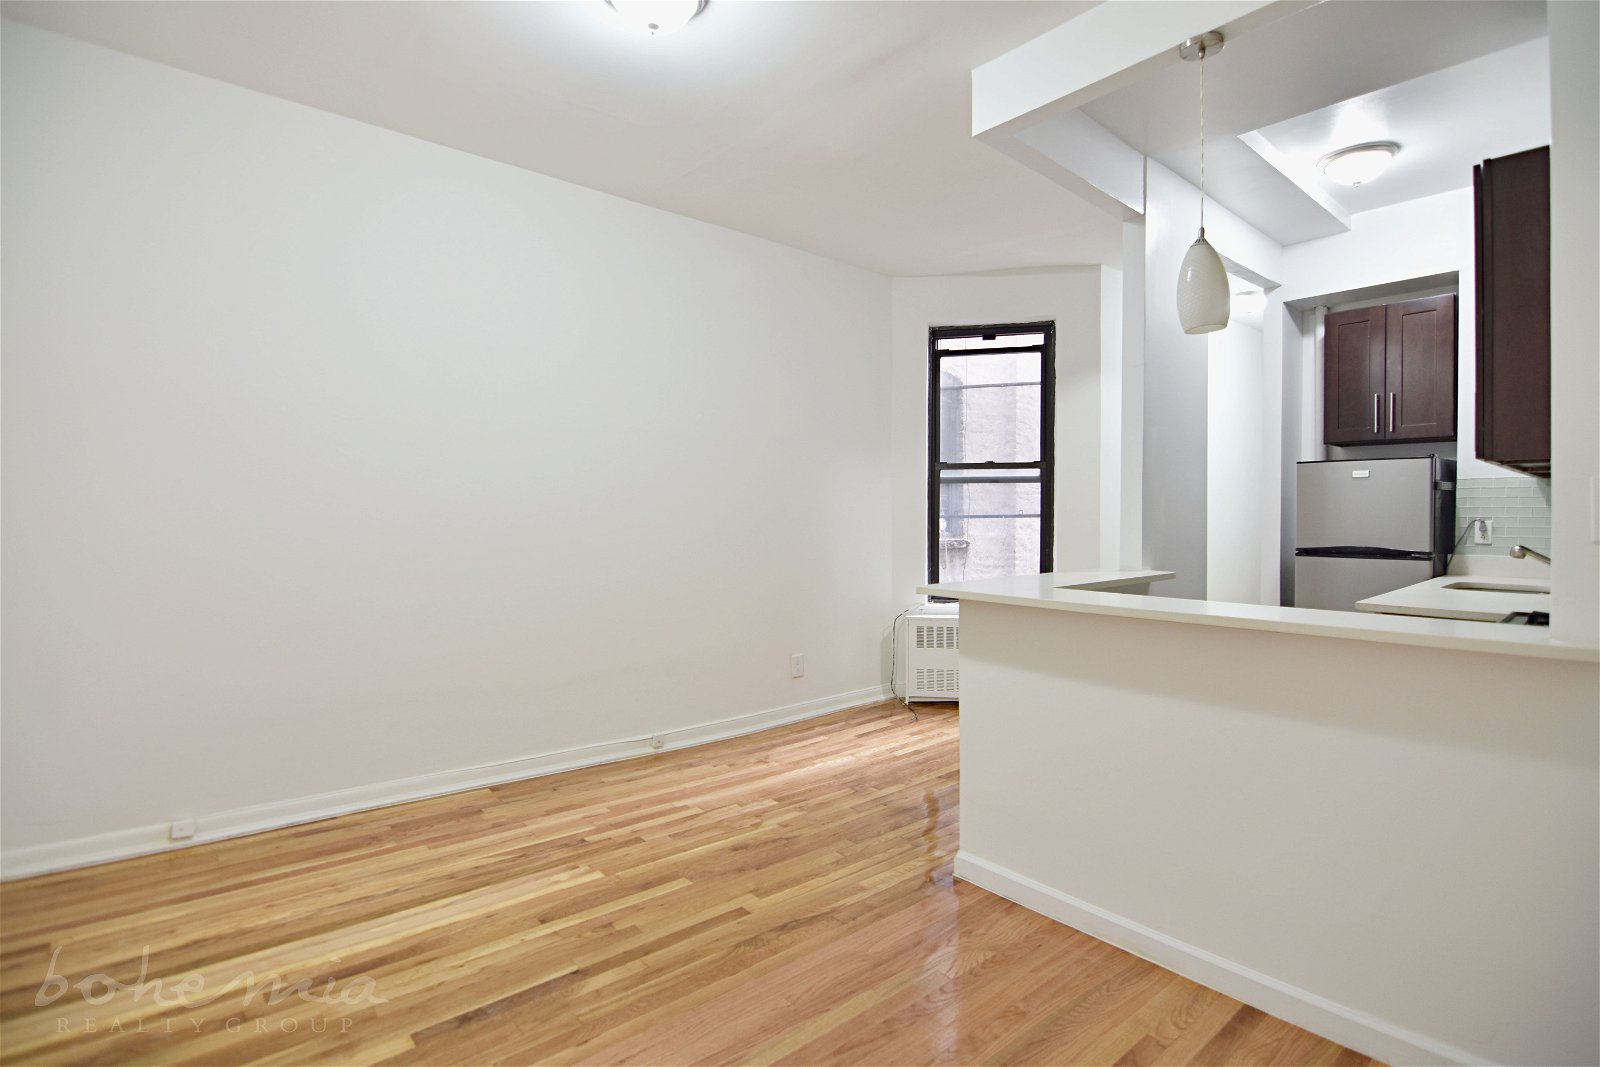 Real estate property located at 2363 Adam Clayton Powell Jr #4-B, New York, New York City, NY